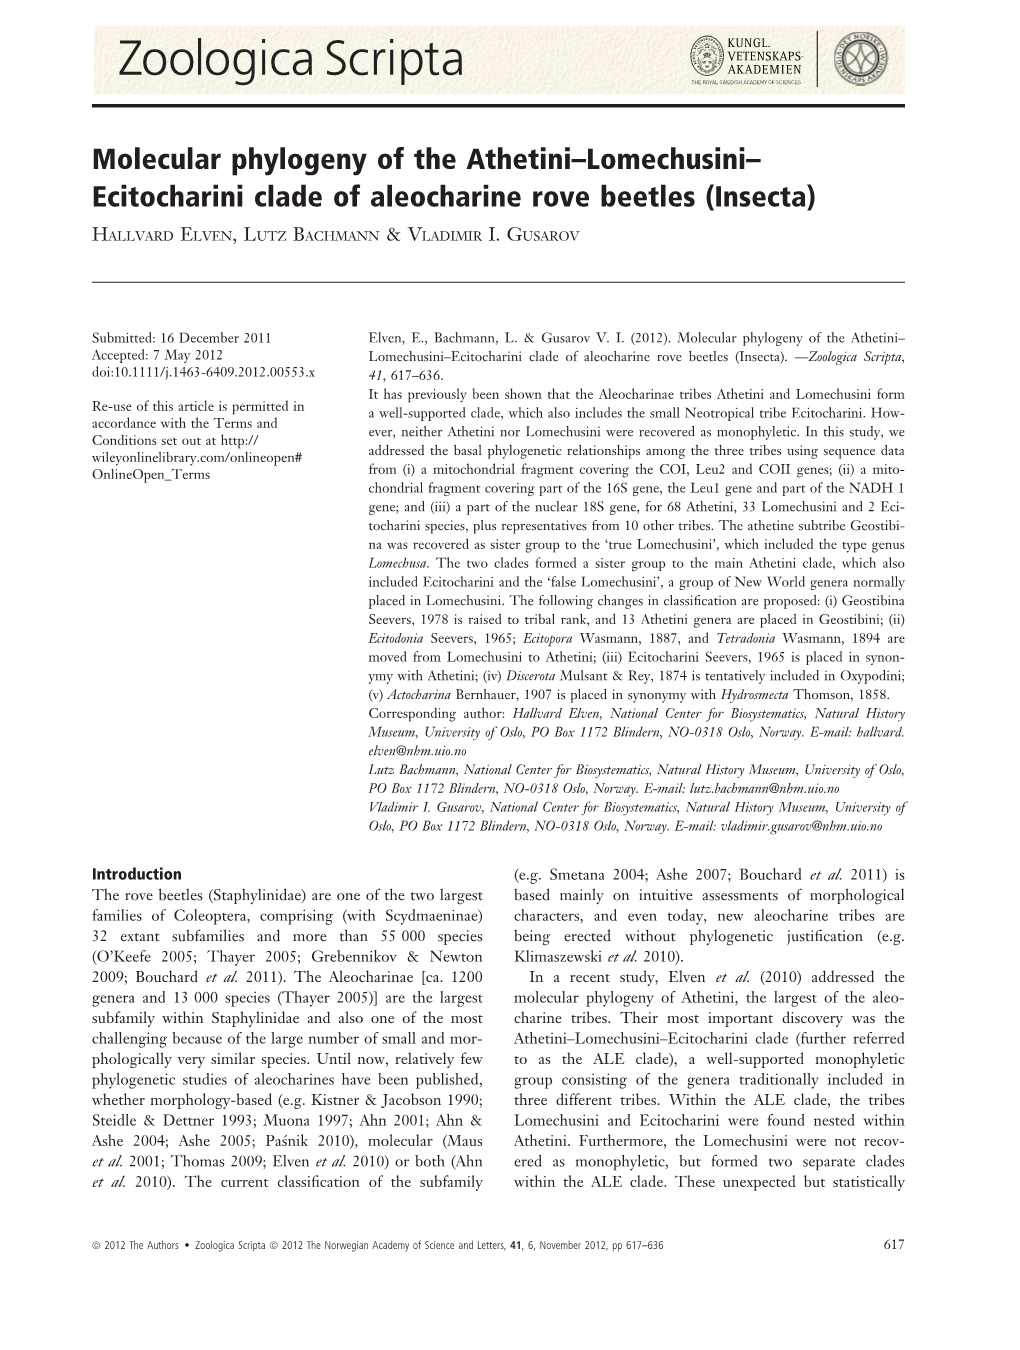 Ecitocharini Clade of Aleocharine Rove Beetles (Insecta)